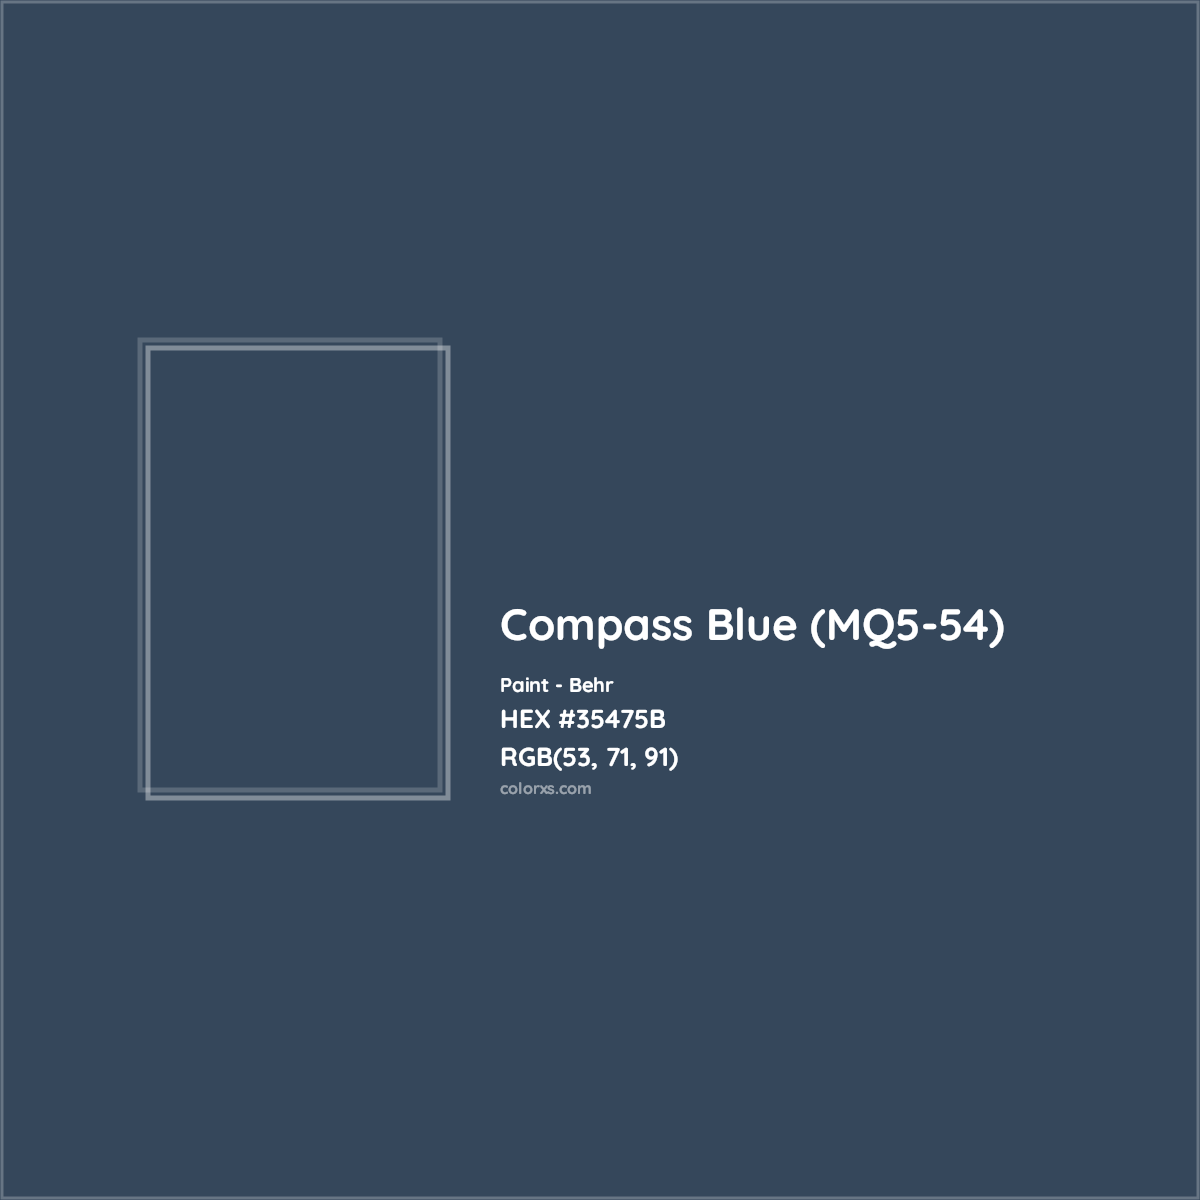 HEX #35475B Compass Blue (MQ5-54) Paint Behr - Color Code